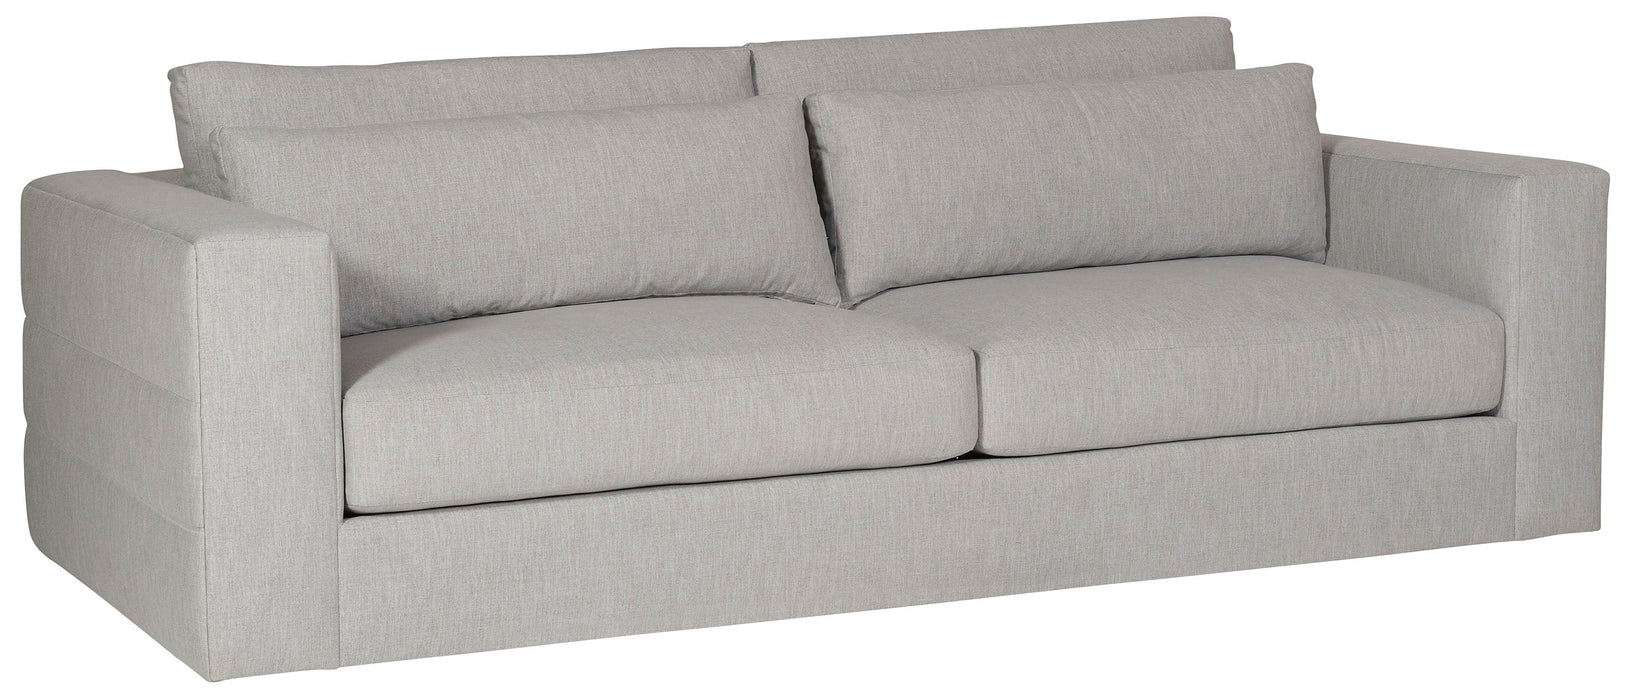 Vanguard Ease Leone Sofa